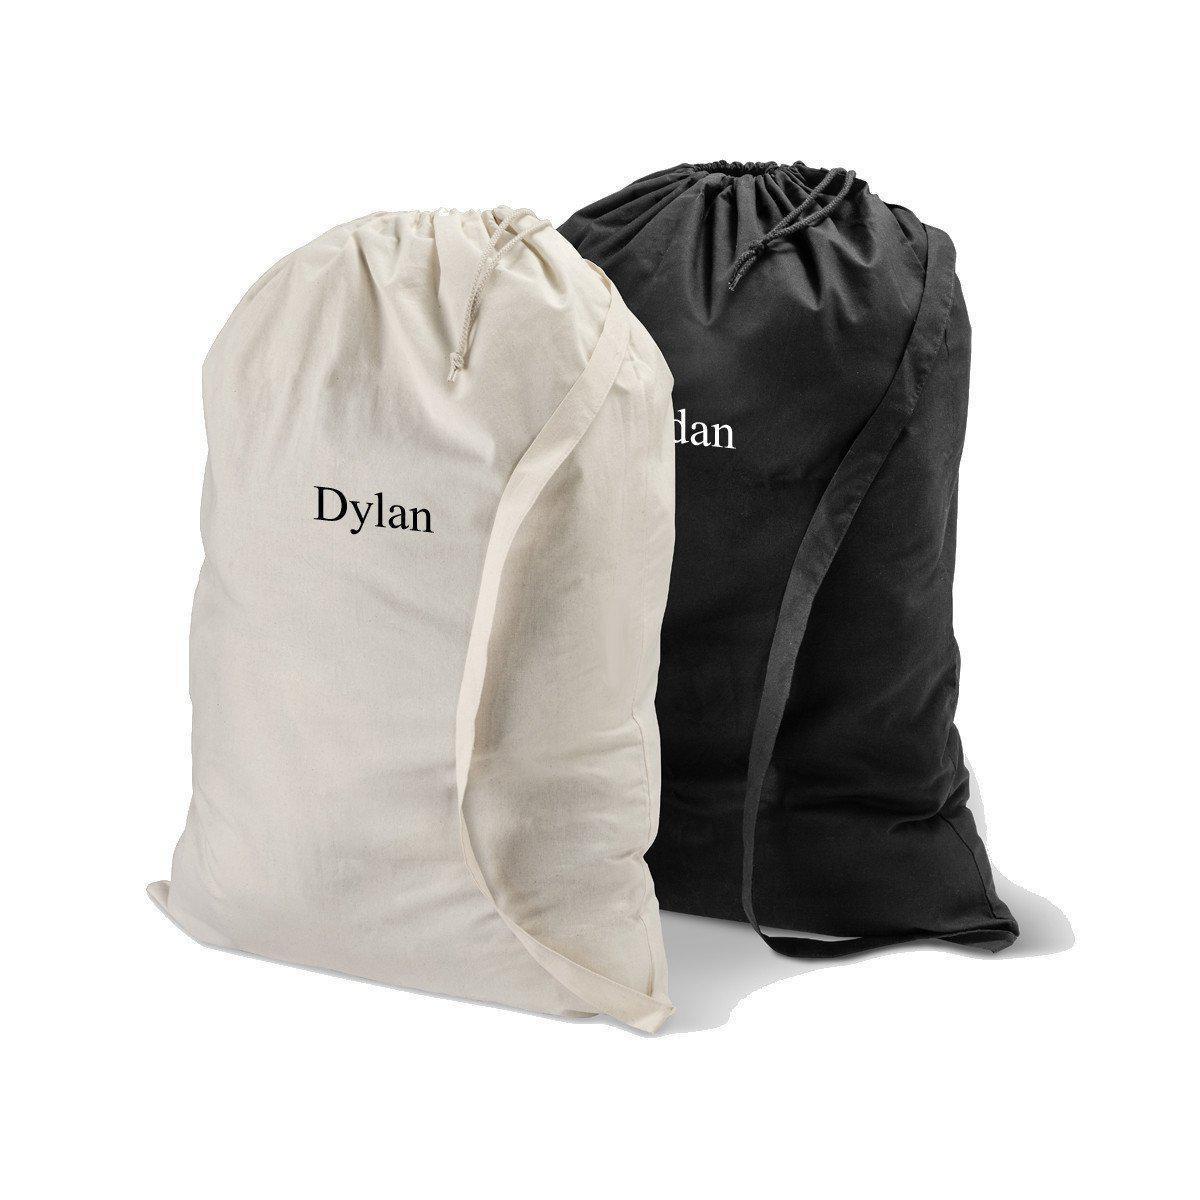 Cotton Laundry Bag, Custom Laundry Bags